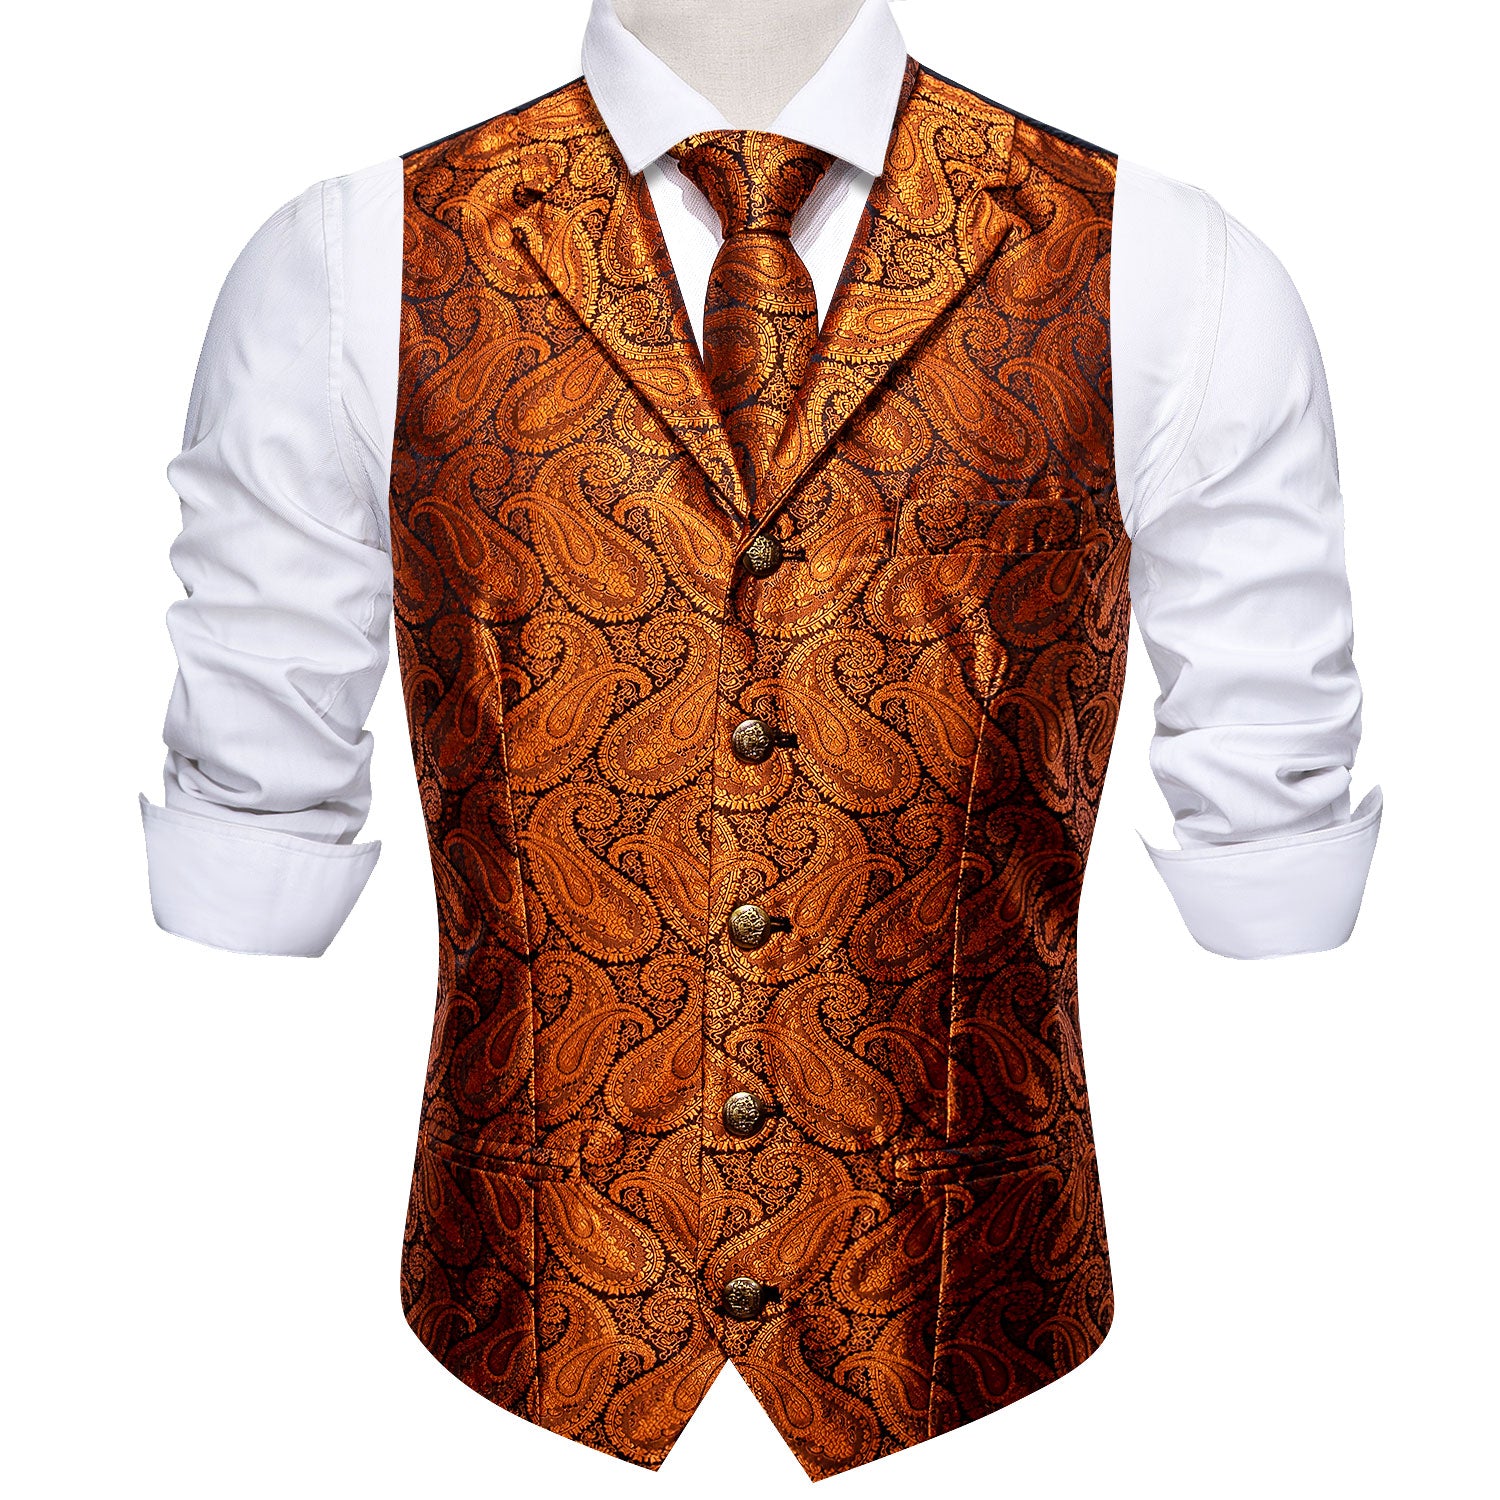 Barry.wang Men's Vest Shining Orange Paisley Silk Notched Collar Vest Necktie Set